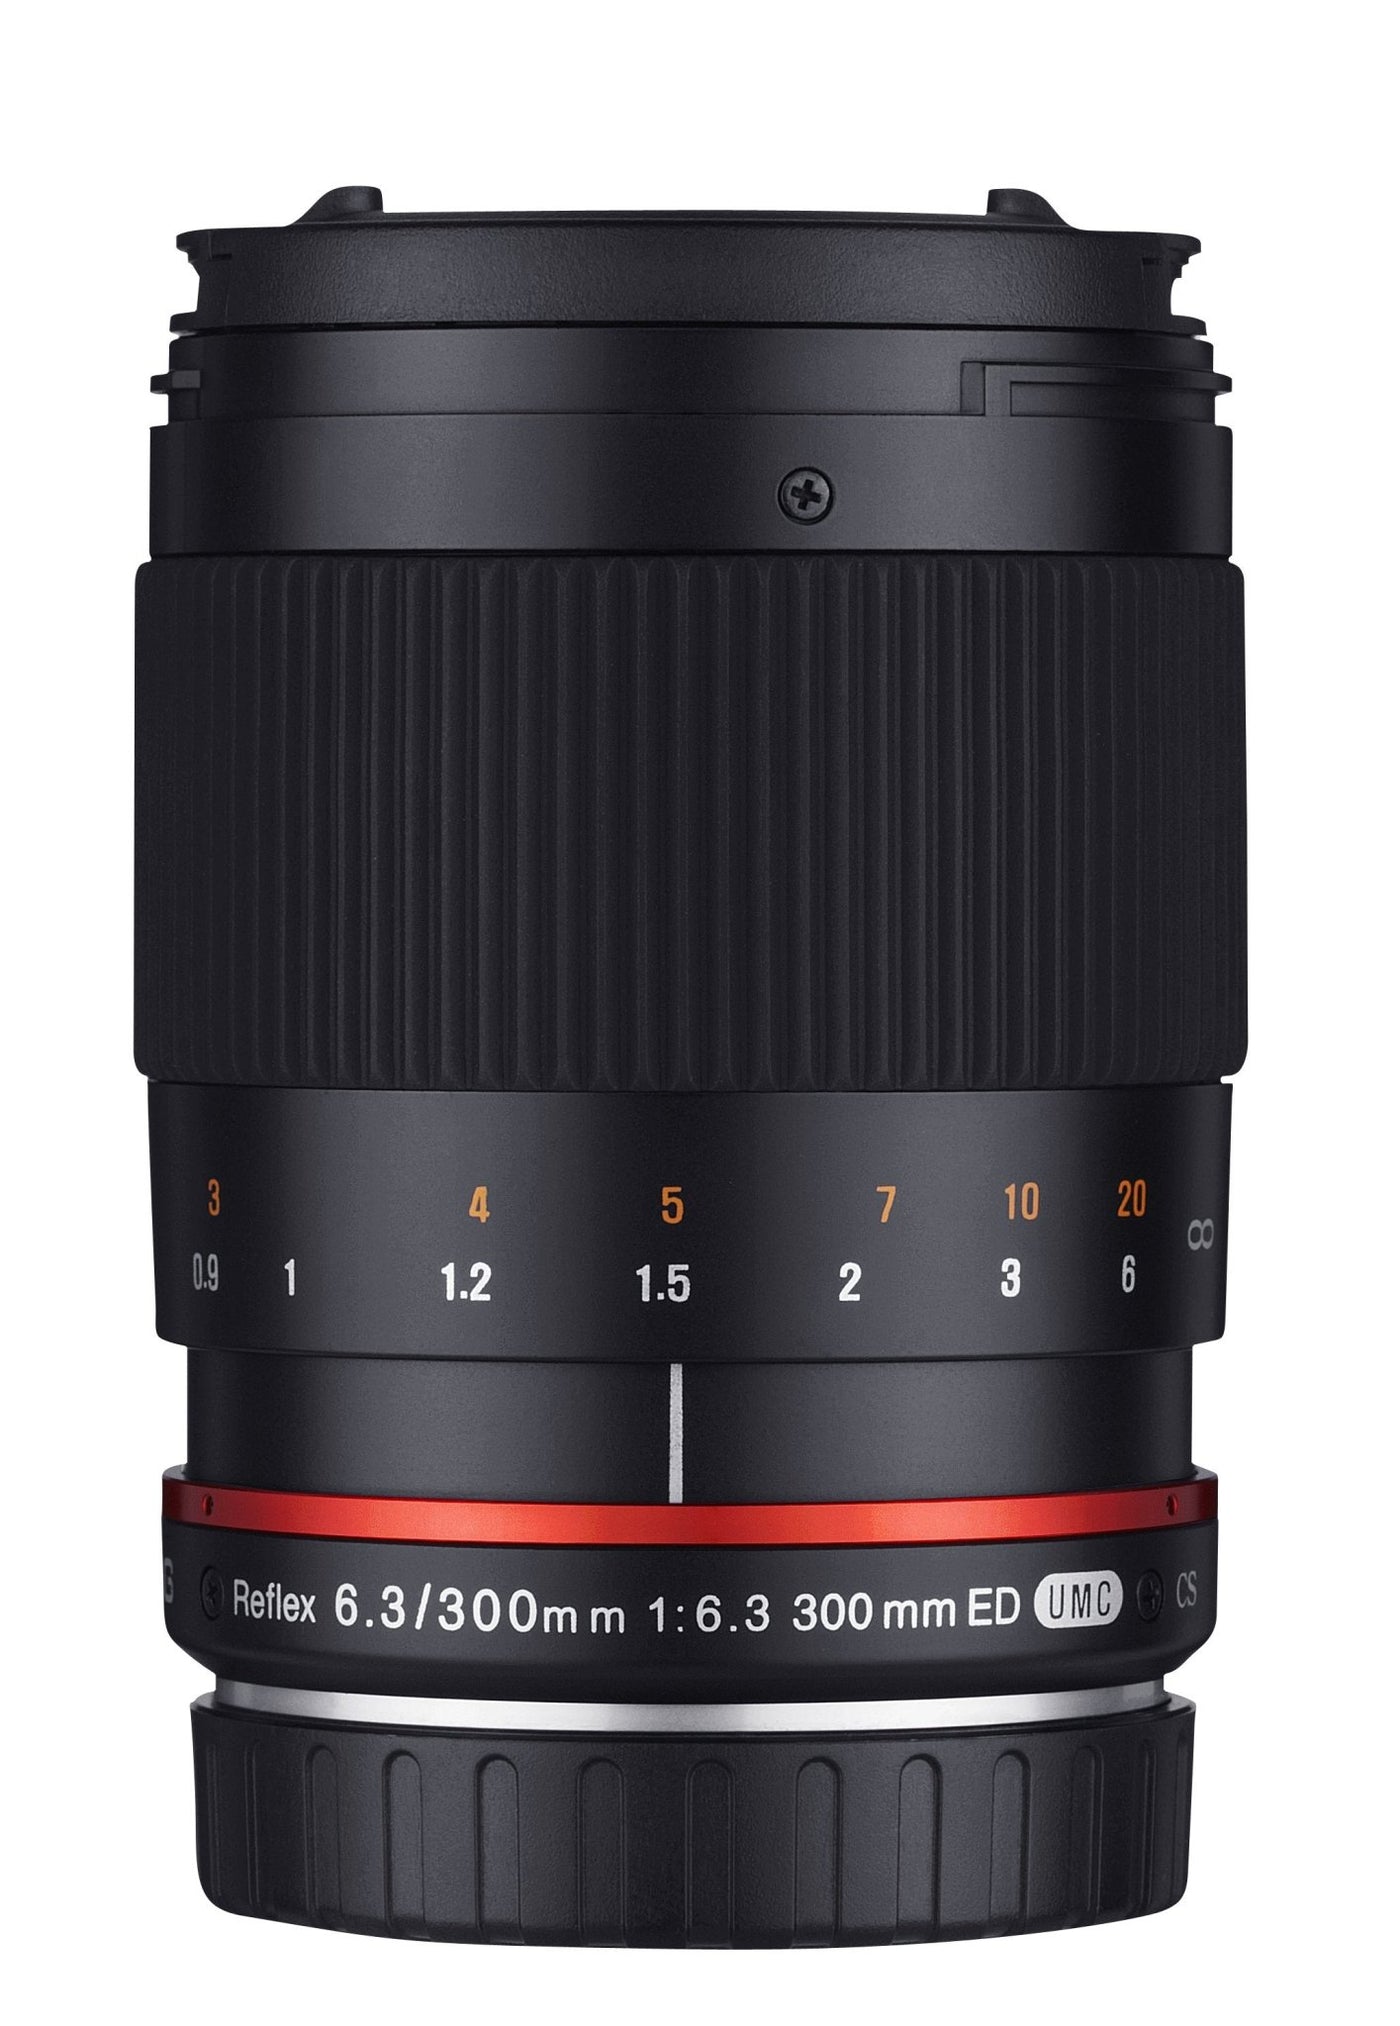 300mm F6.3 Catadioptric Compact Telephoto for Mirrorless Cameras - Rokinon Lenses - 300M-M-BK